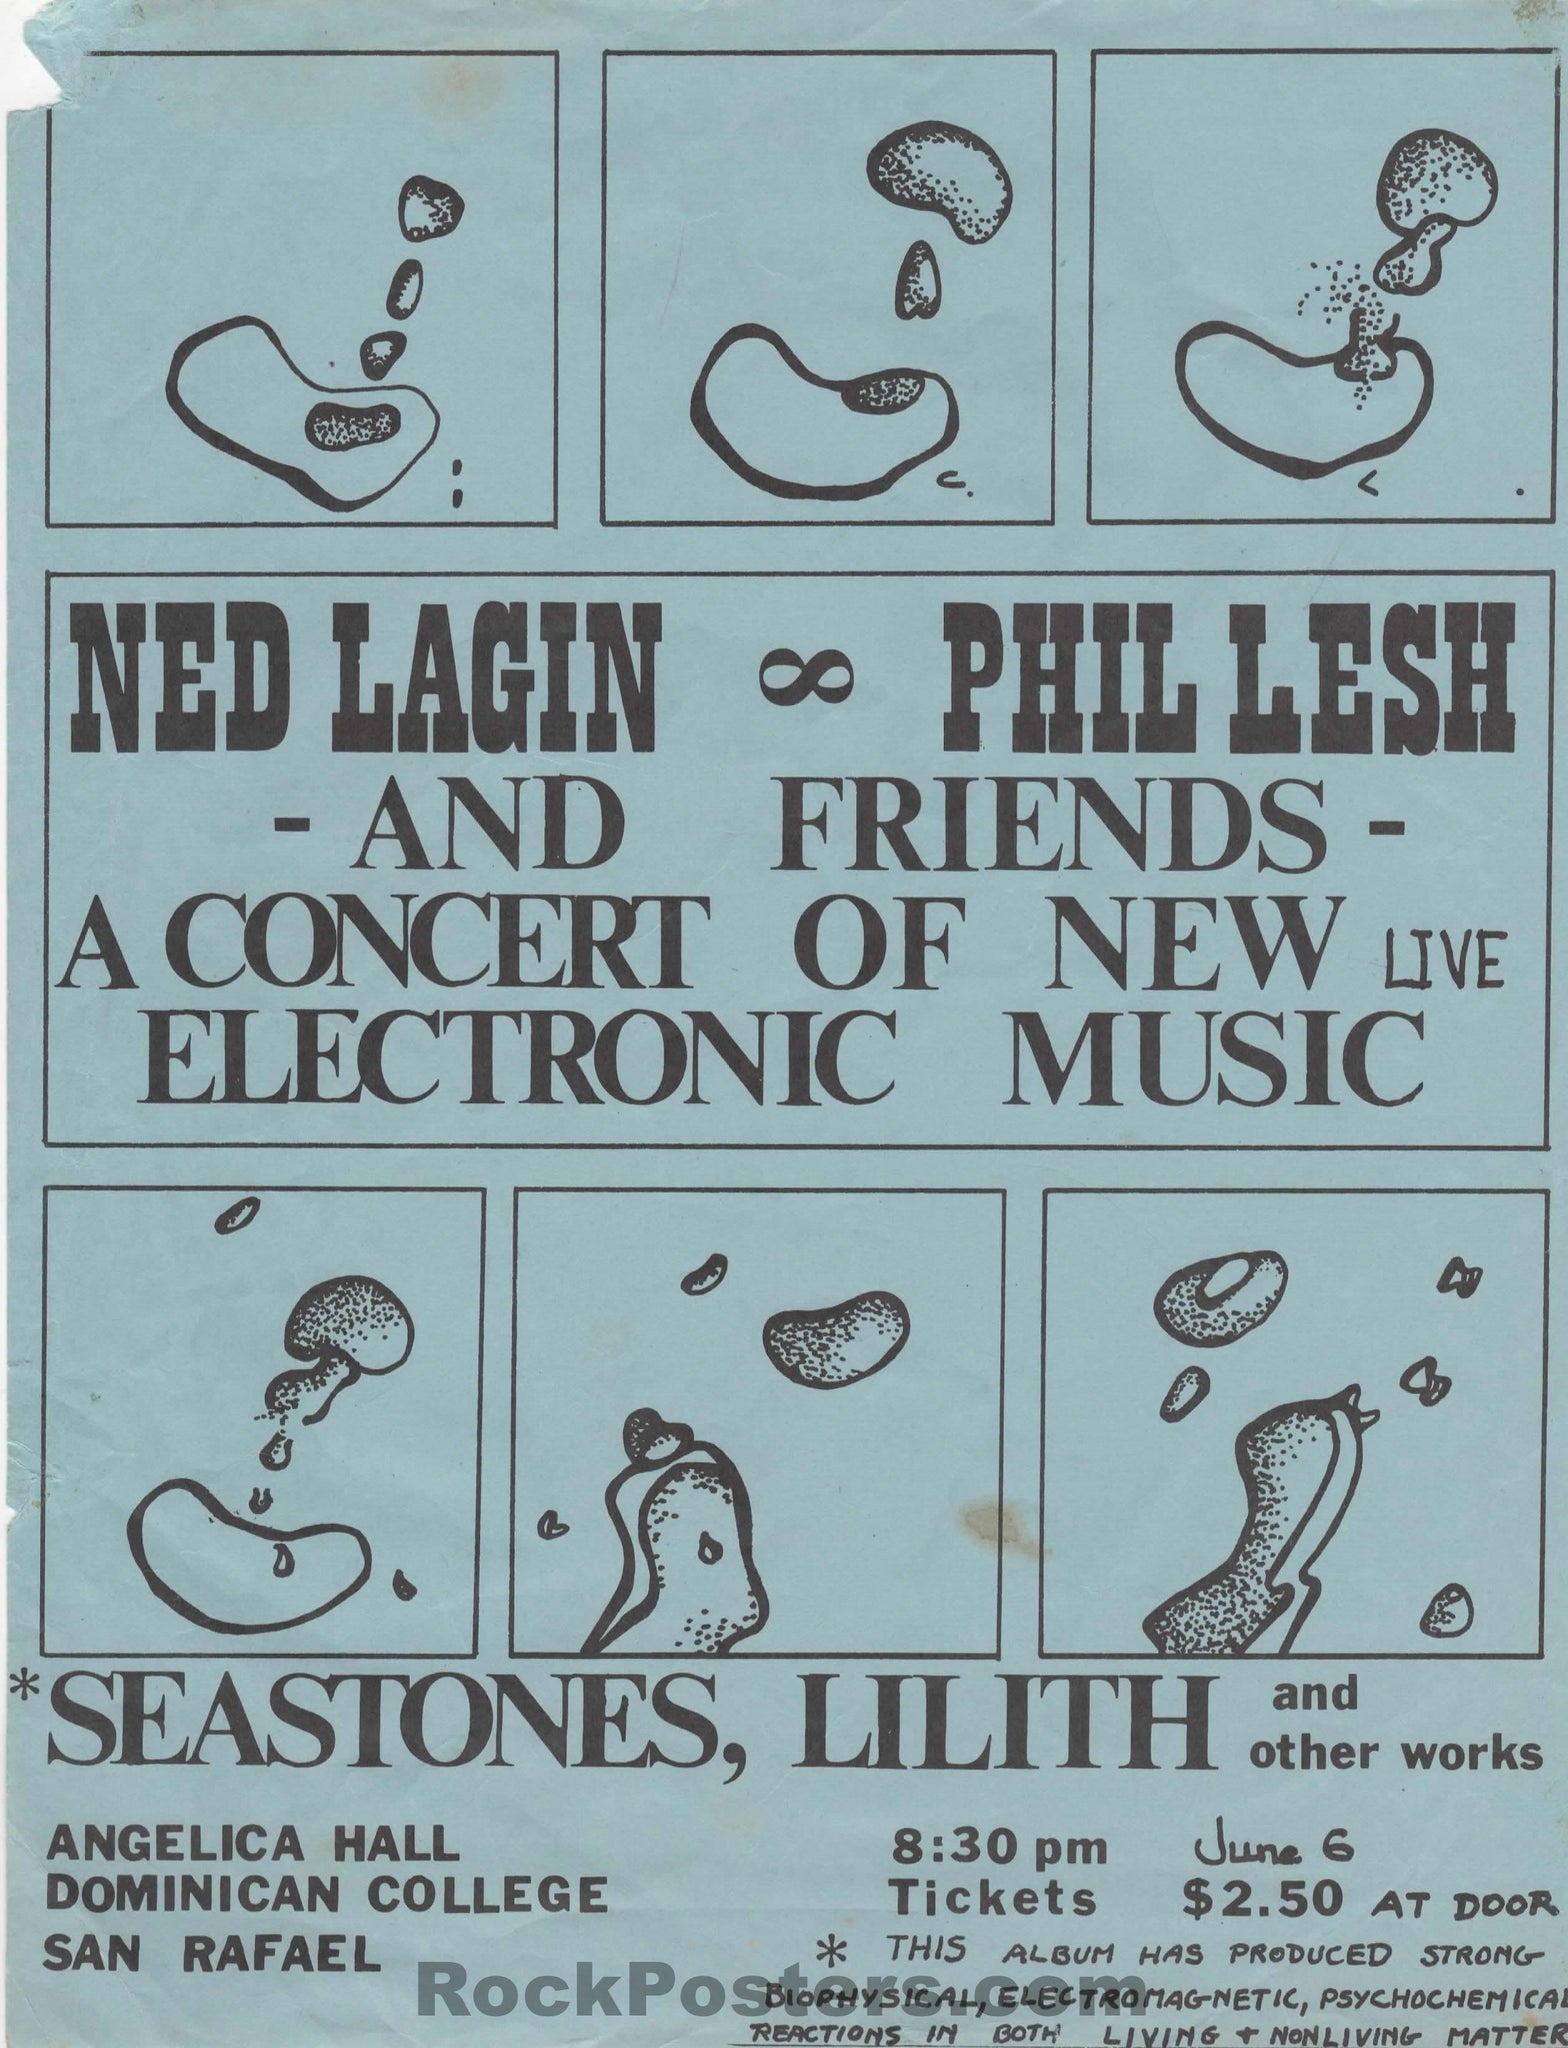 AUCTION - Phil Lesh & Ned Lagin - Jerry Garcia Mickey Hart - 1975 Handbill - San Rafael - Good